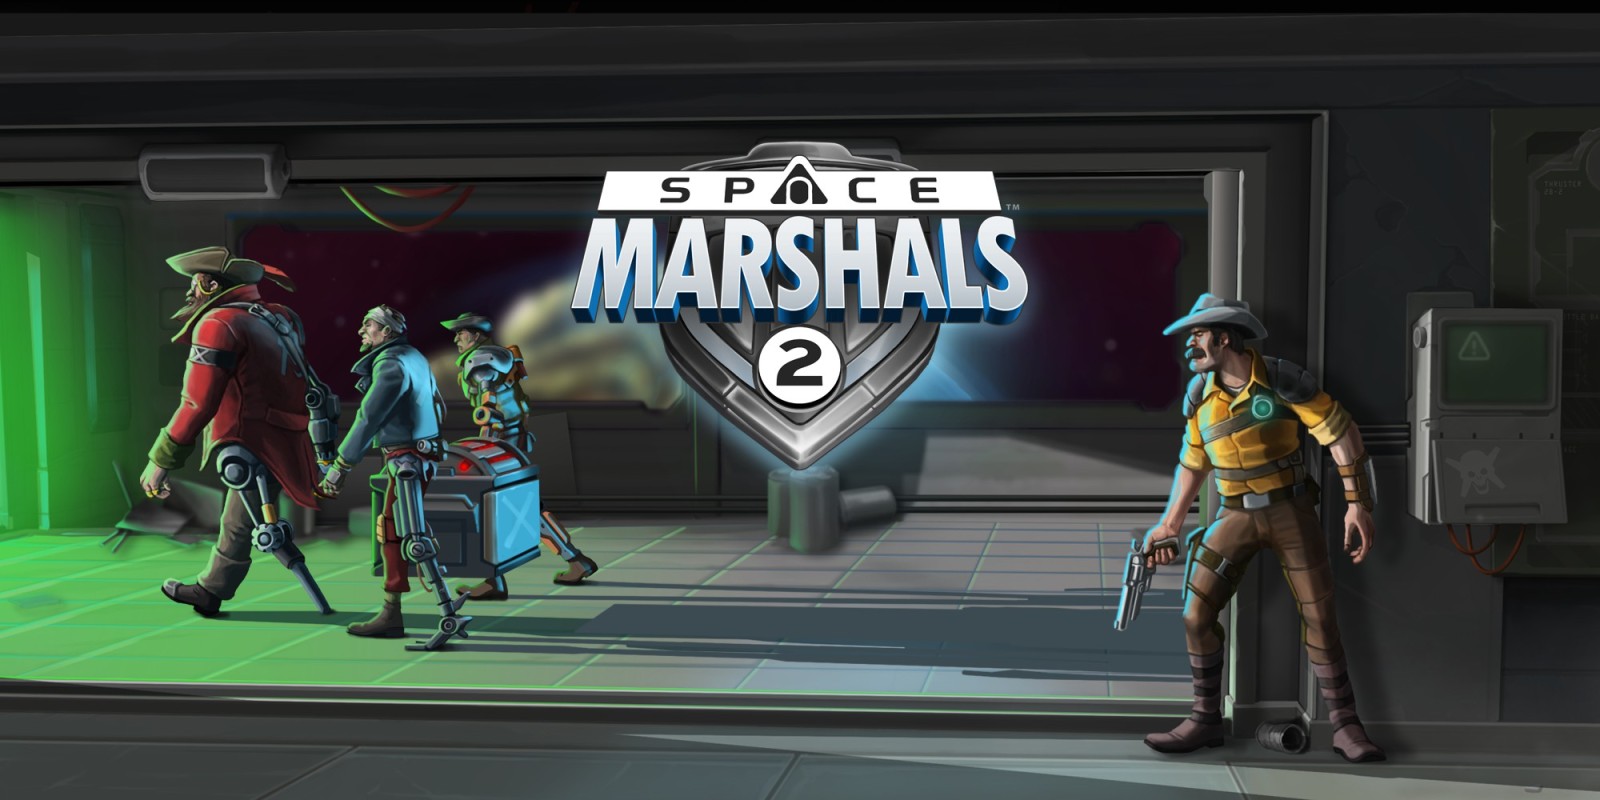 Space Marshals 2